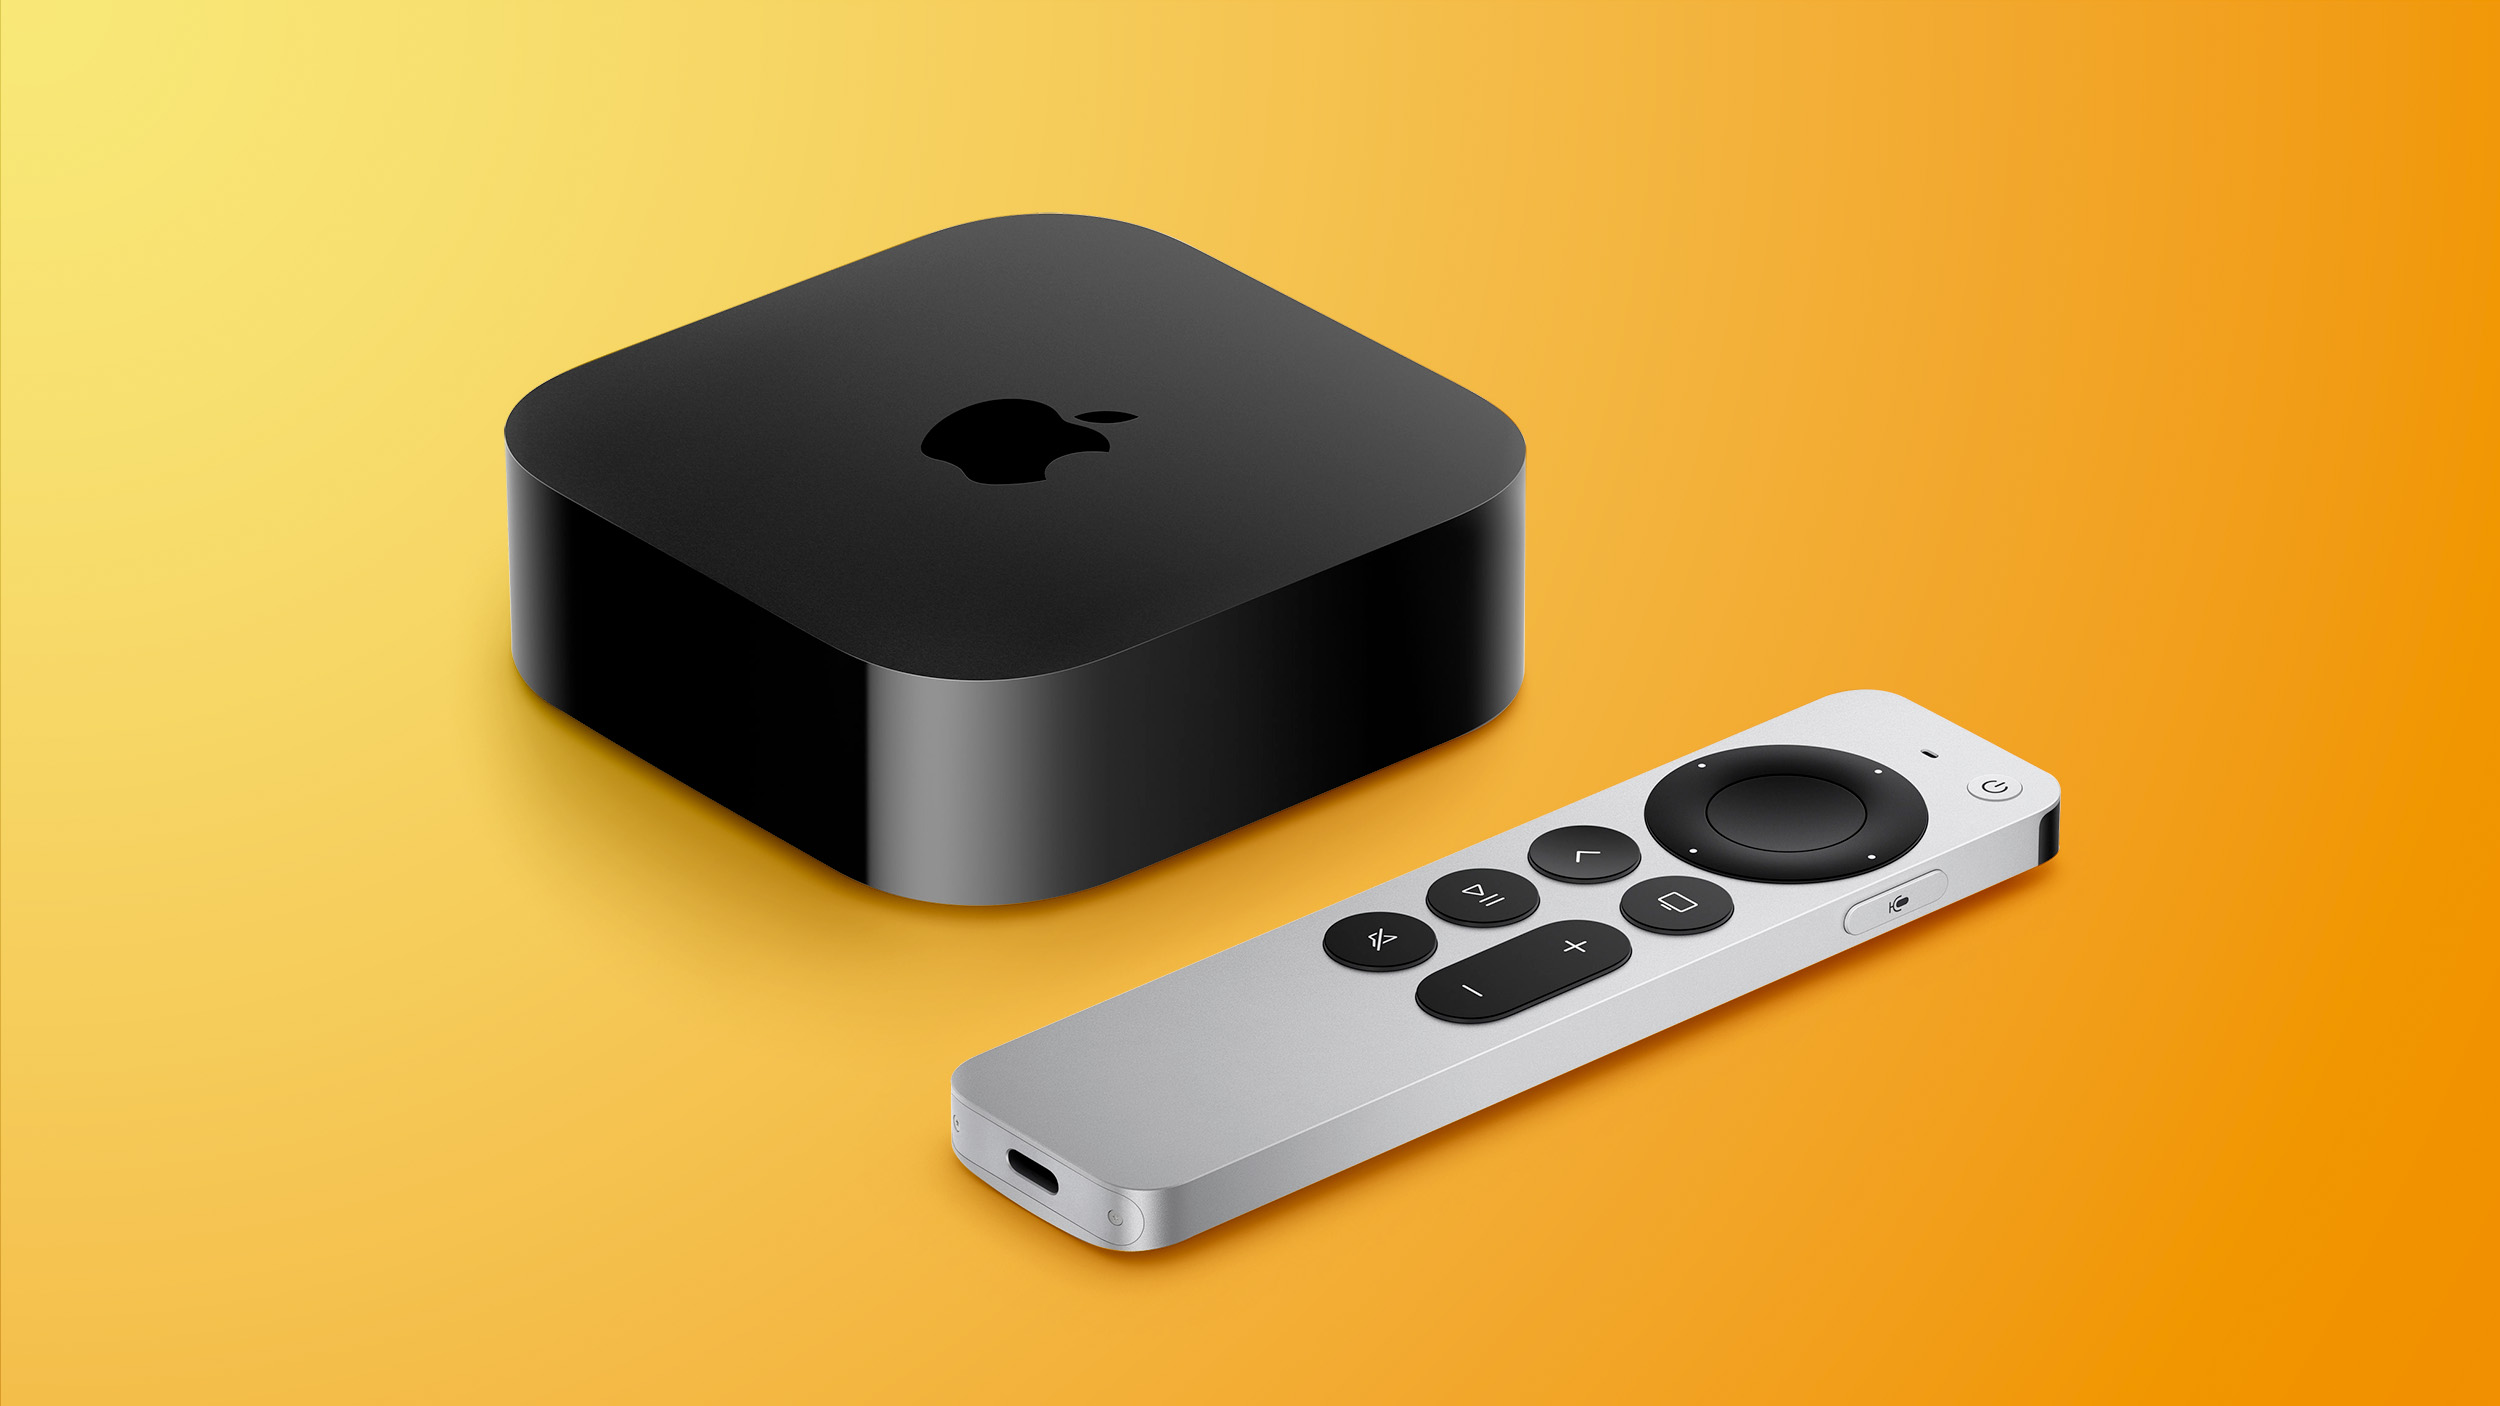 Skyldfølelse konkurrence hvor ofte Apple TV: Should You Buy? Features, Reviews, and More